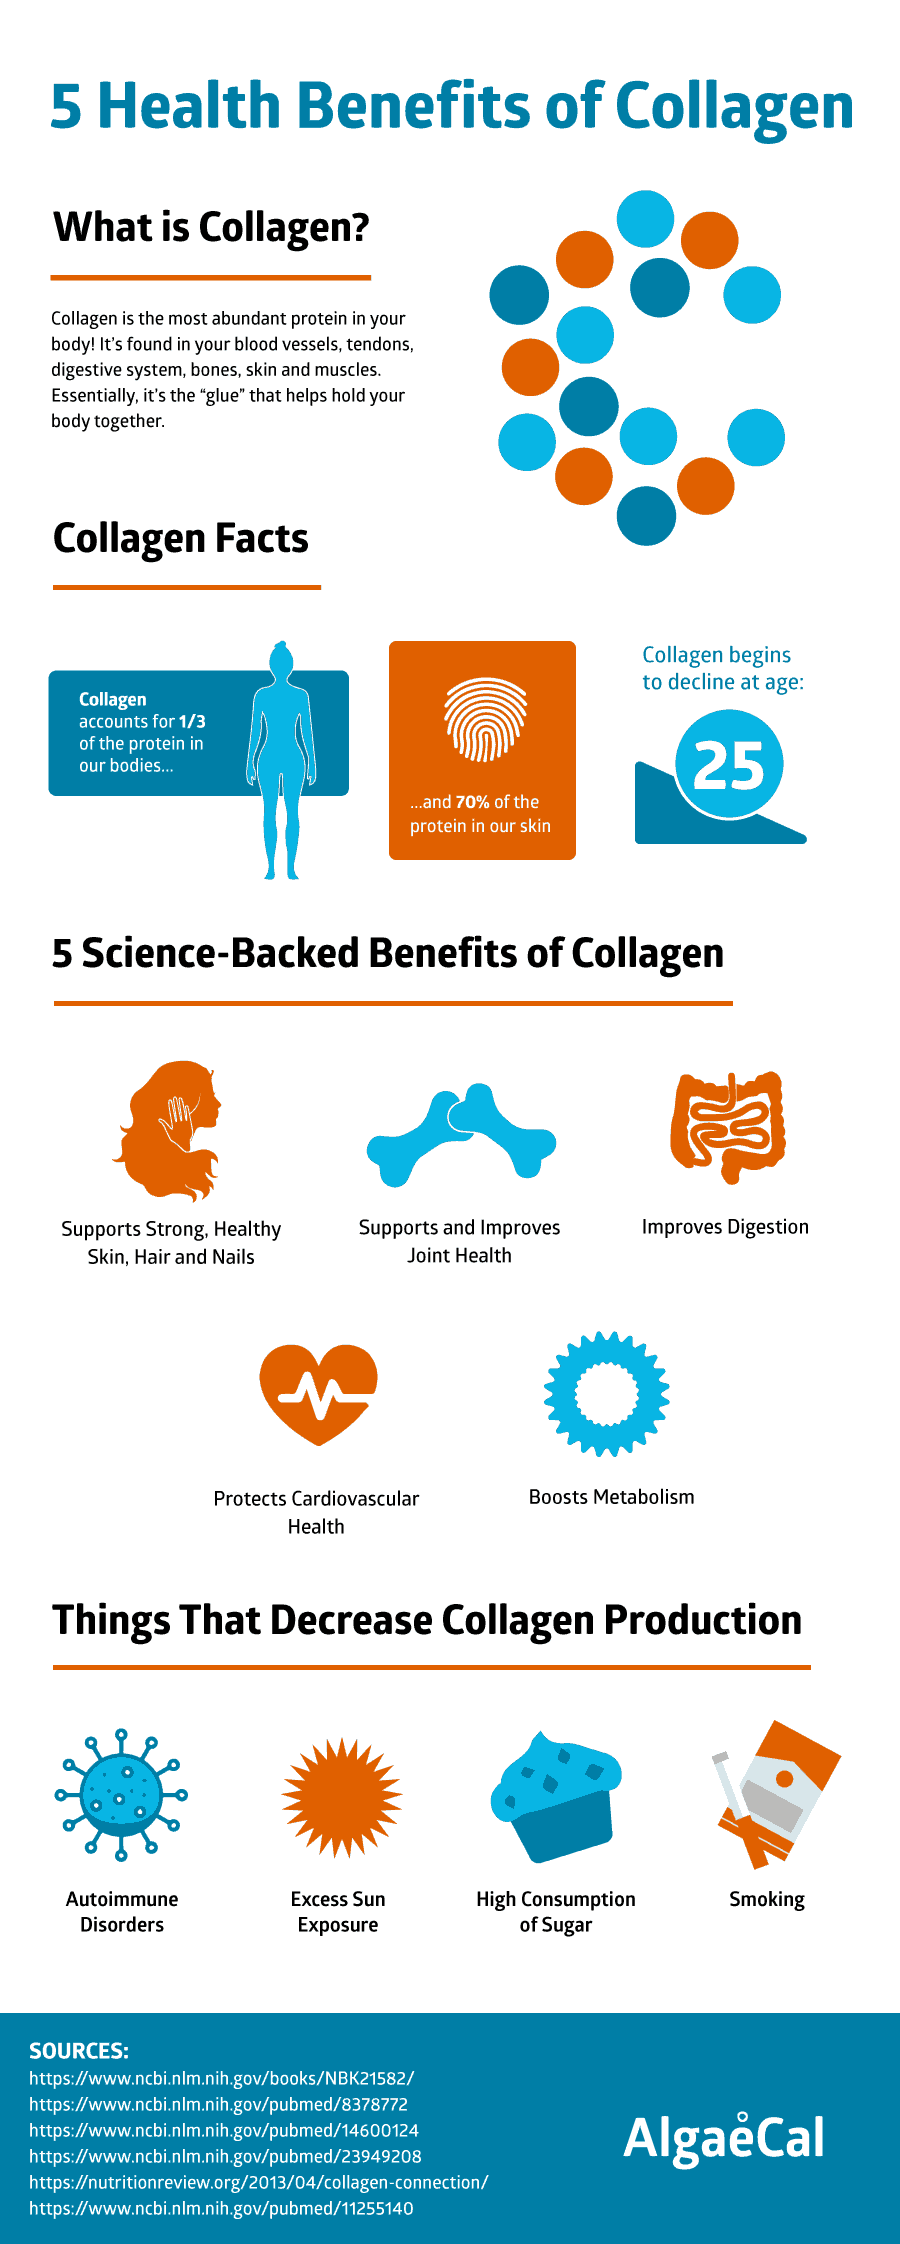 5 Health Benefits of Collagen